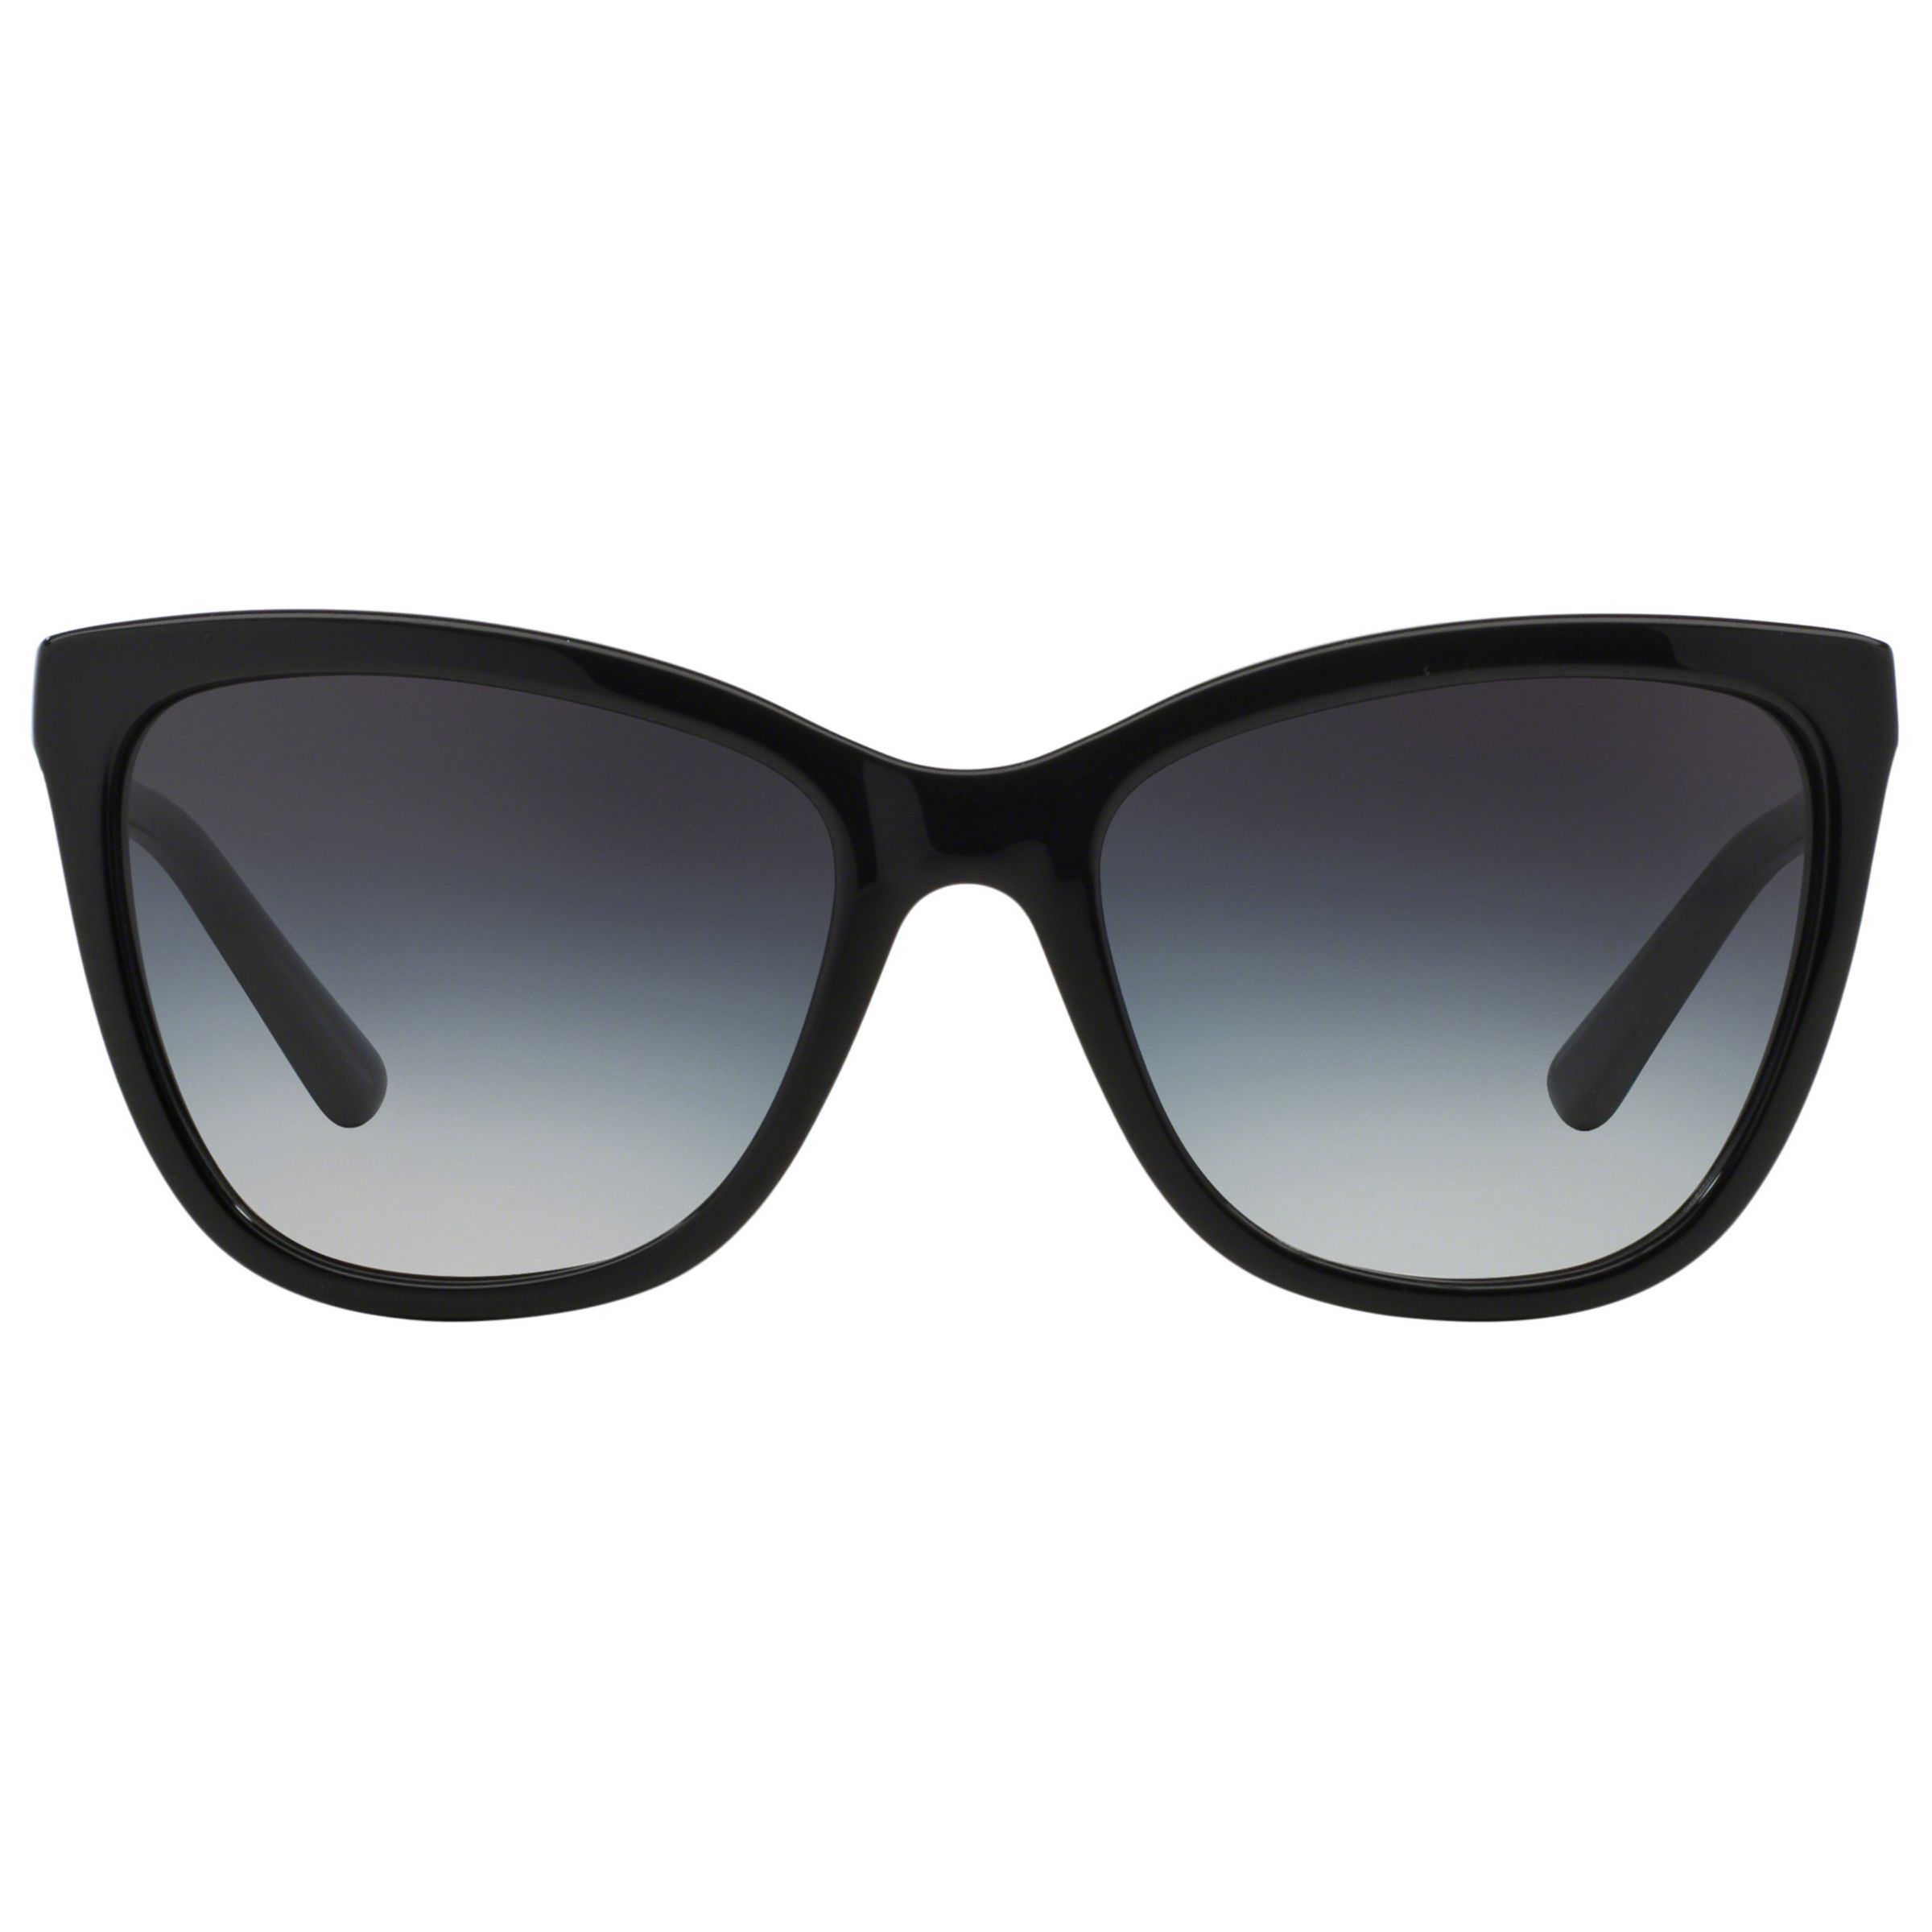 Dolce & Gabbana DG4193 Cat's Eye Sunglasses, Black at John Lewis & Partners